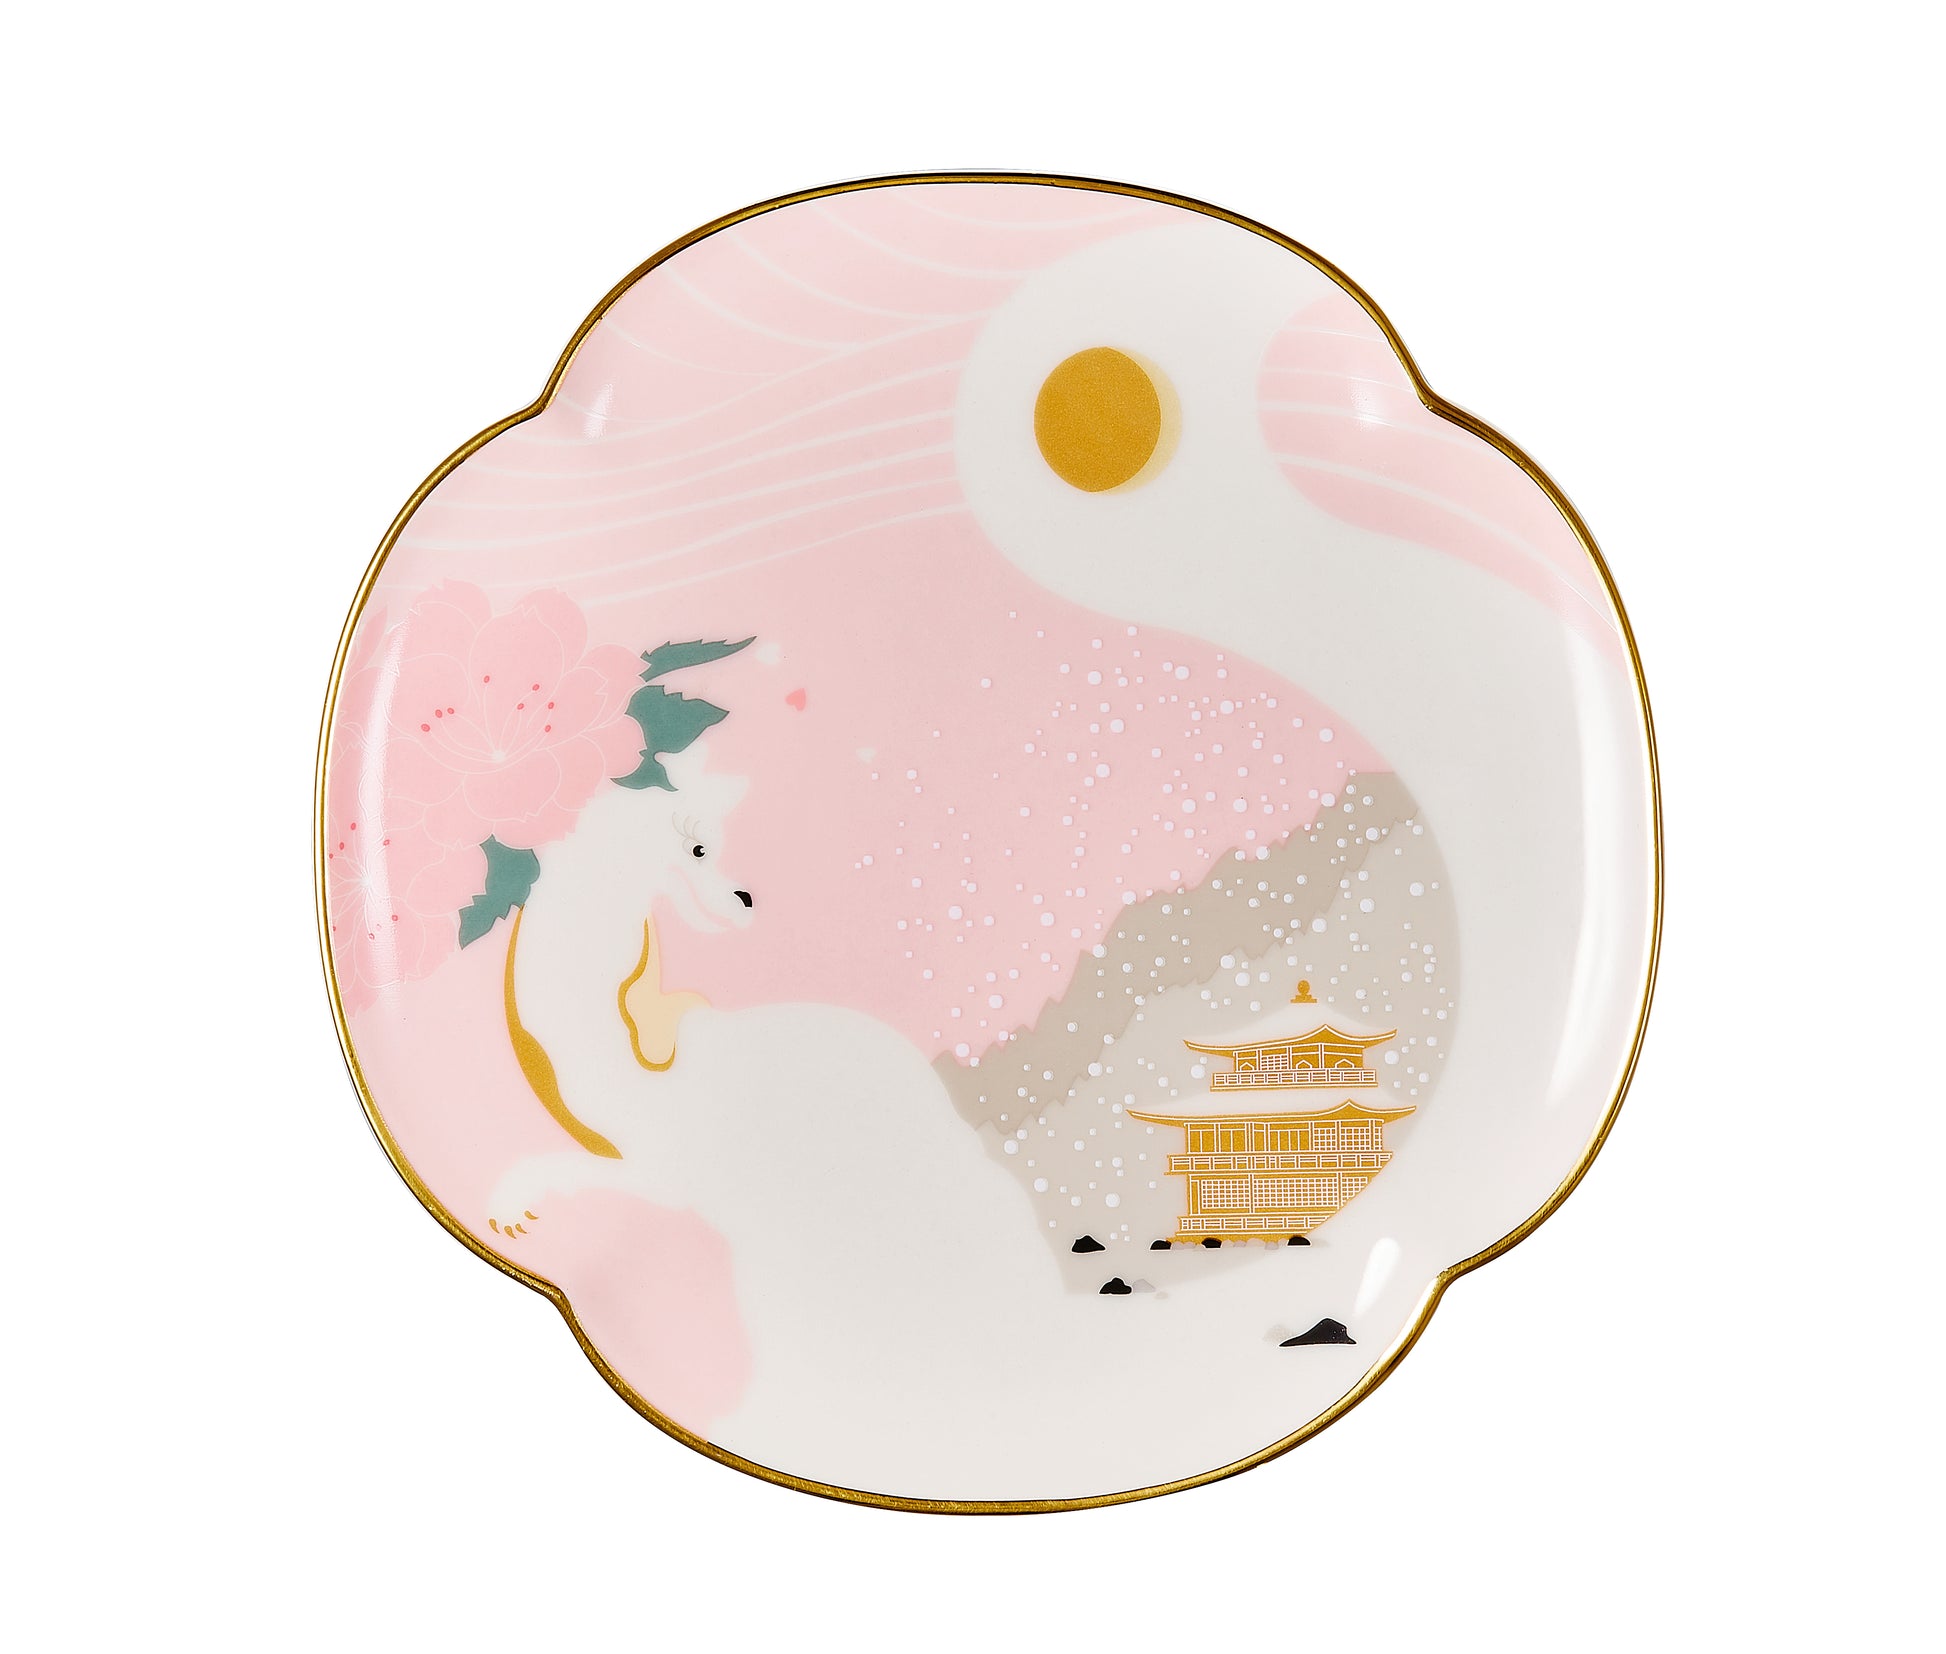 Fox of Nine Tails - Ukiyo-e Inspired Ceramic Vase, Mug, Plate | Ceramicraze